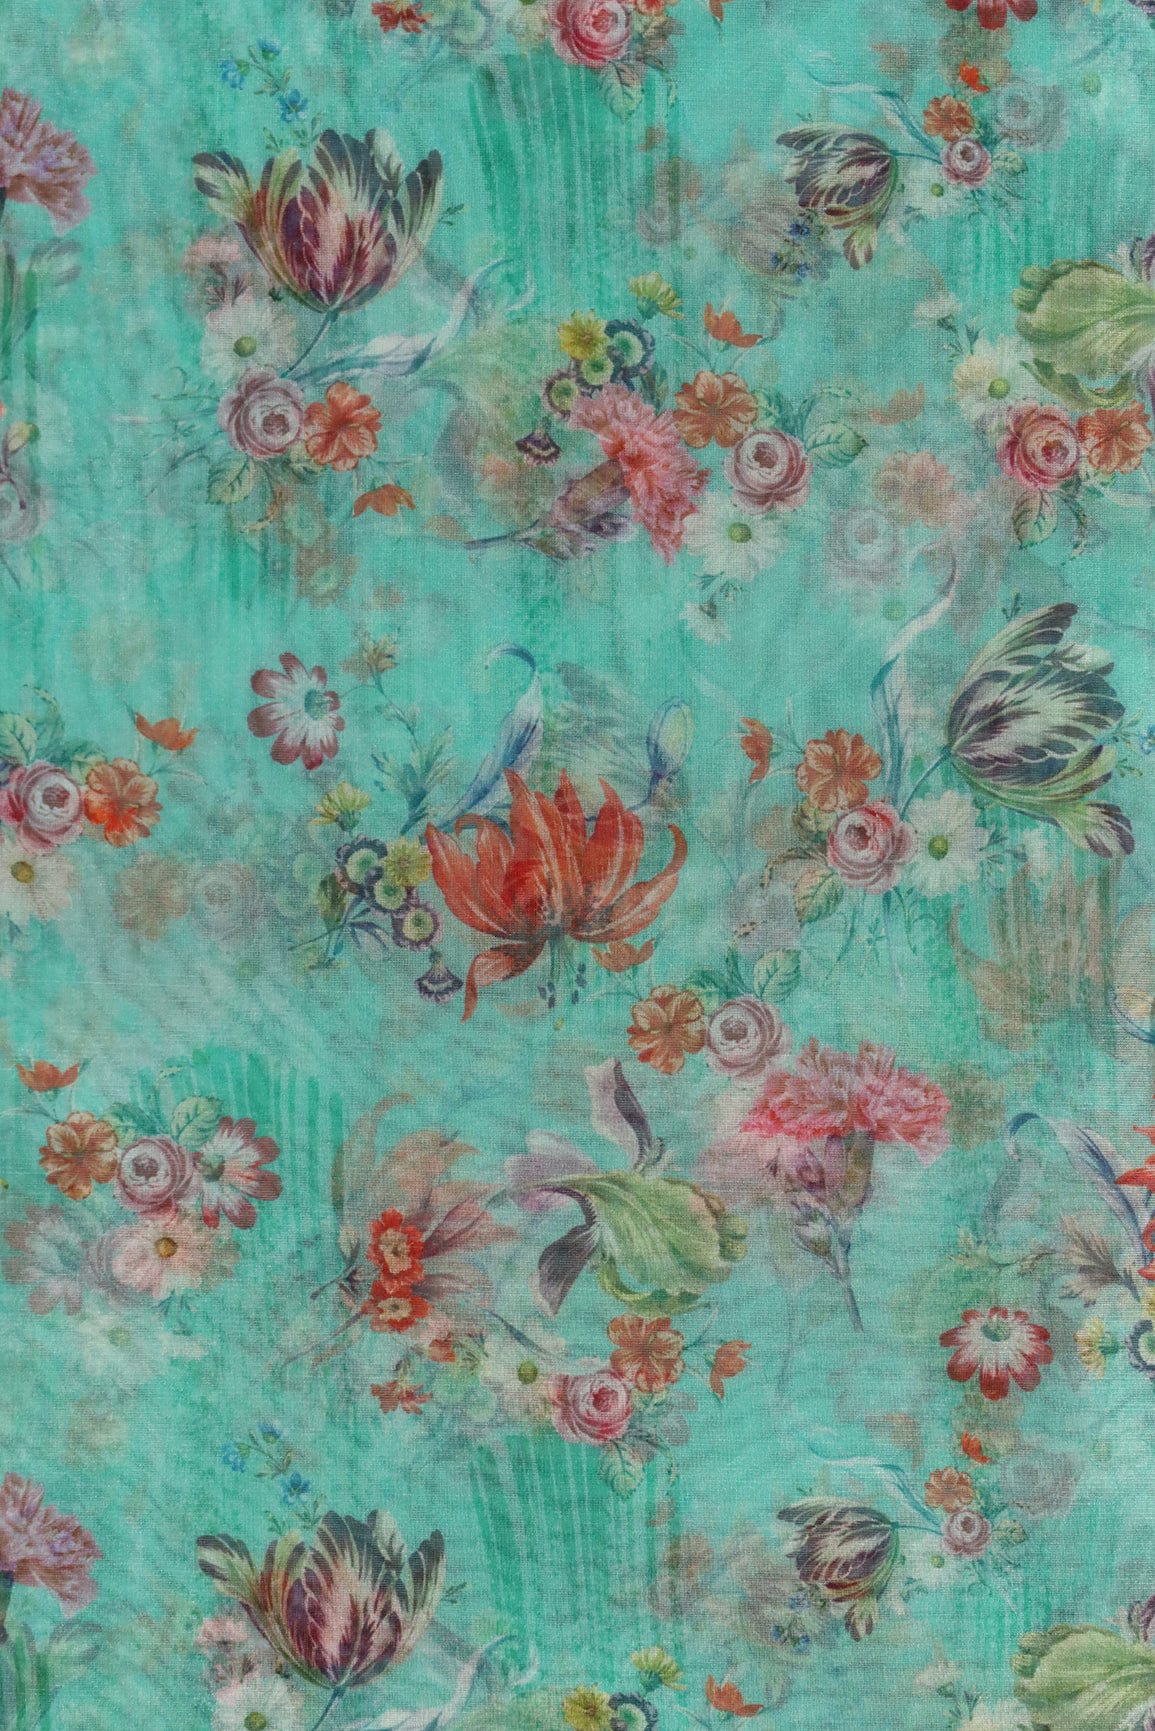 doeraa Prints Multi Color Beautiful Floral Digital Print On Teal Organza Fabric